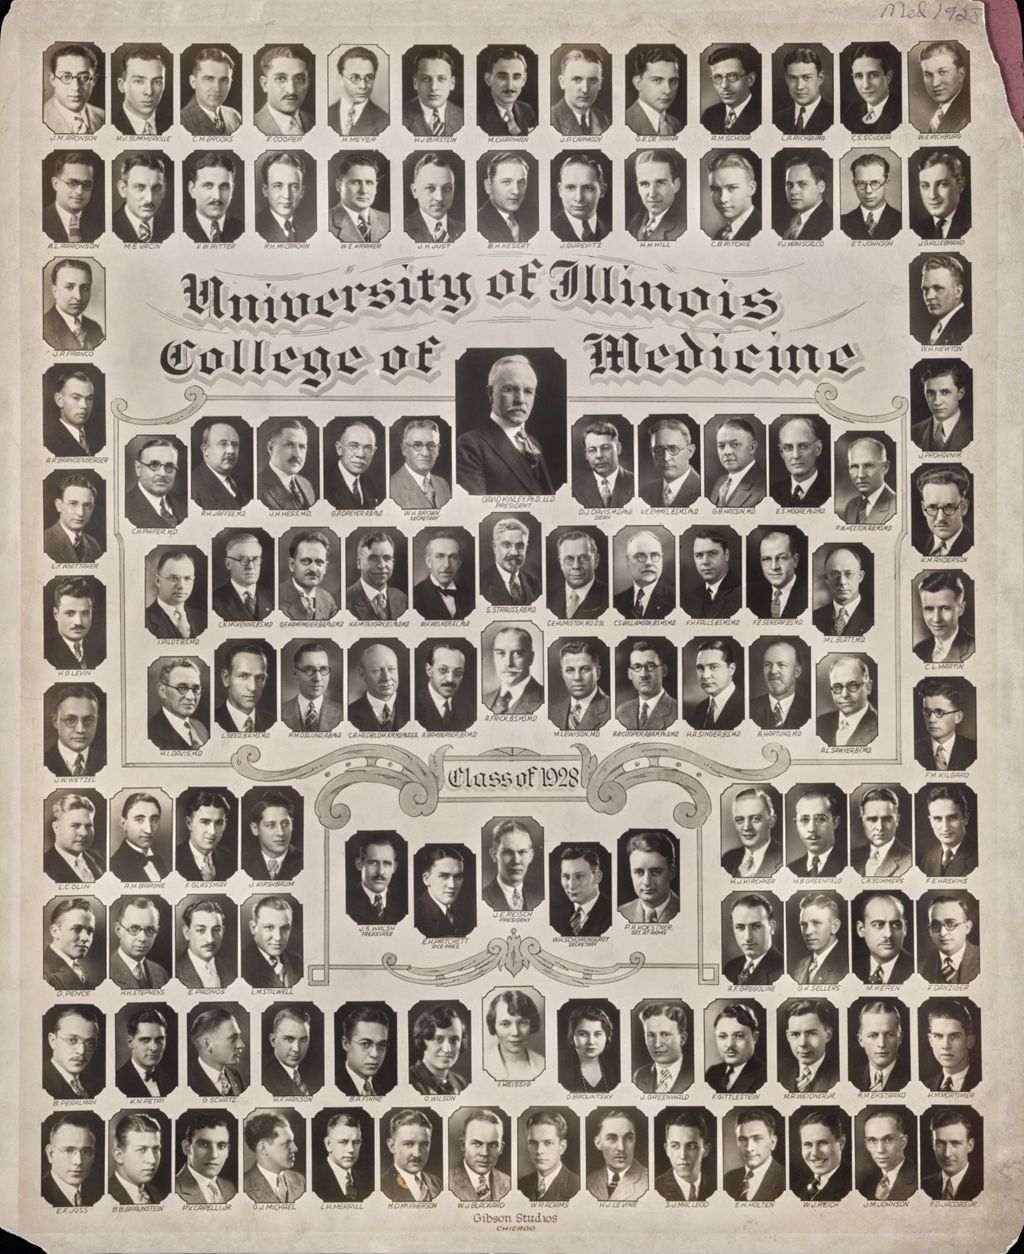 Miniature of 1928 graduating class, University of Illinois College of Medicine